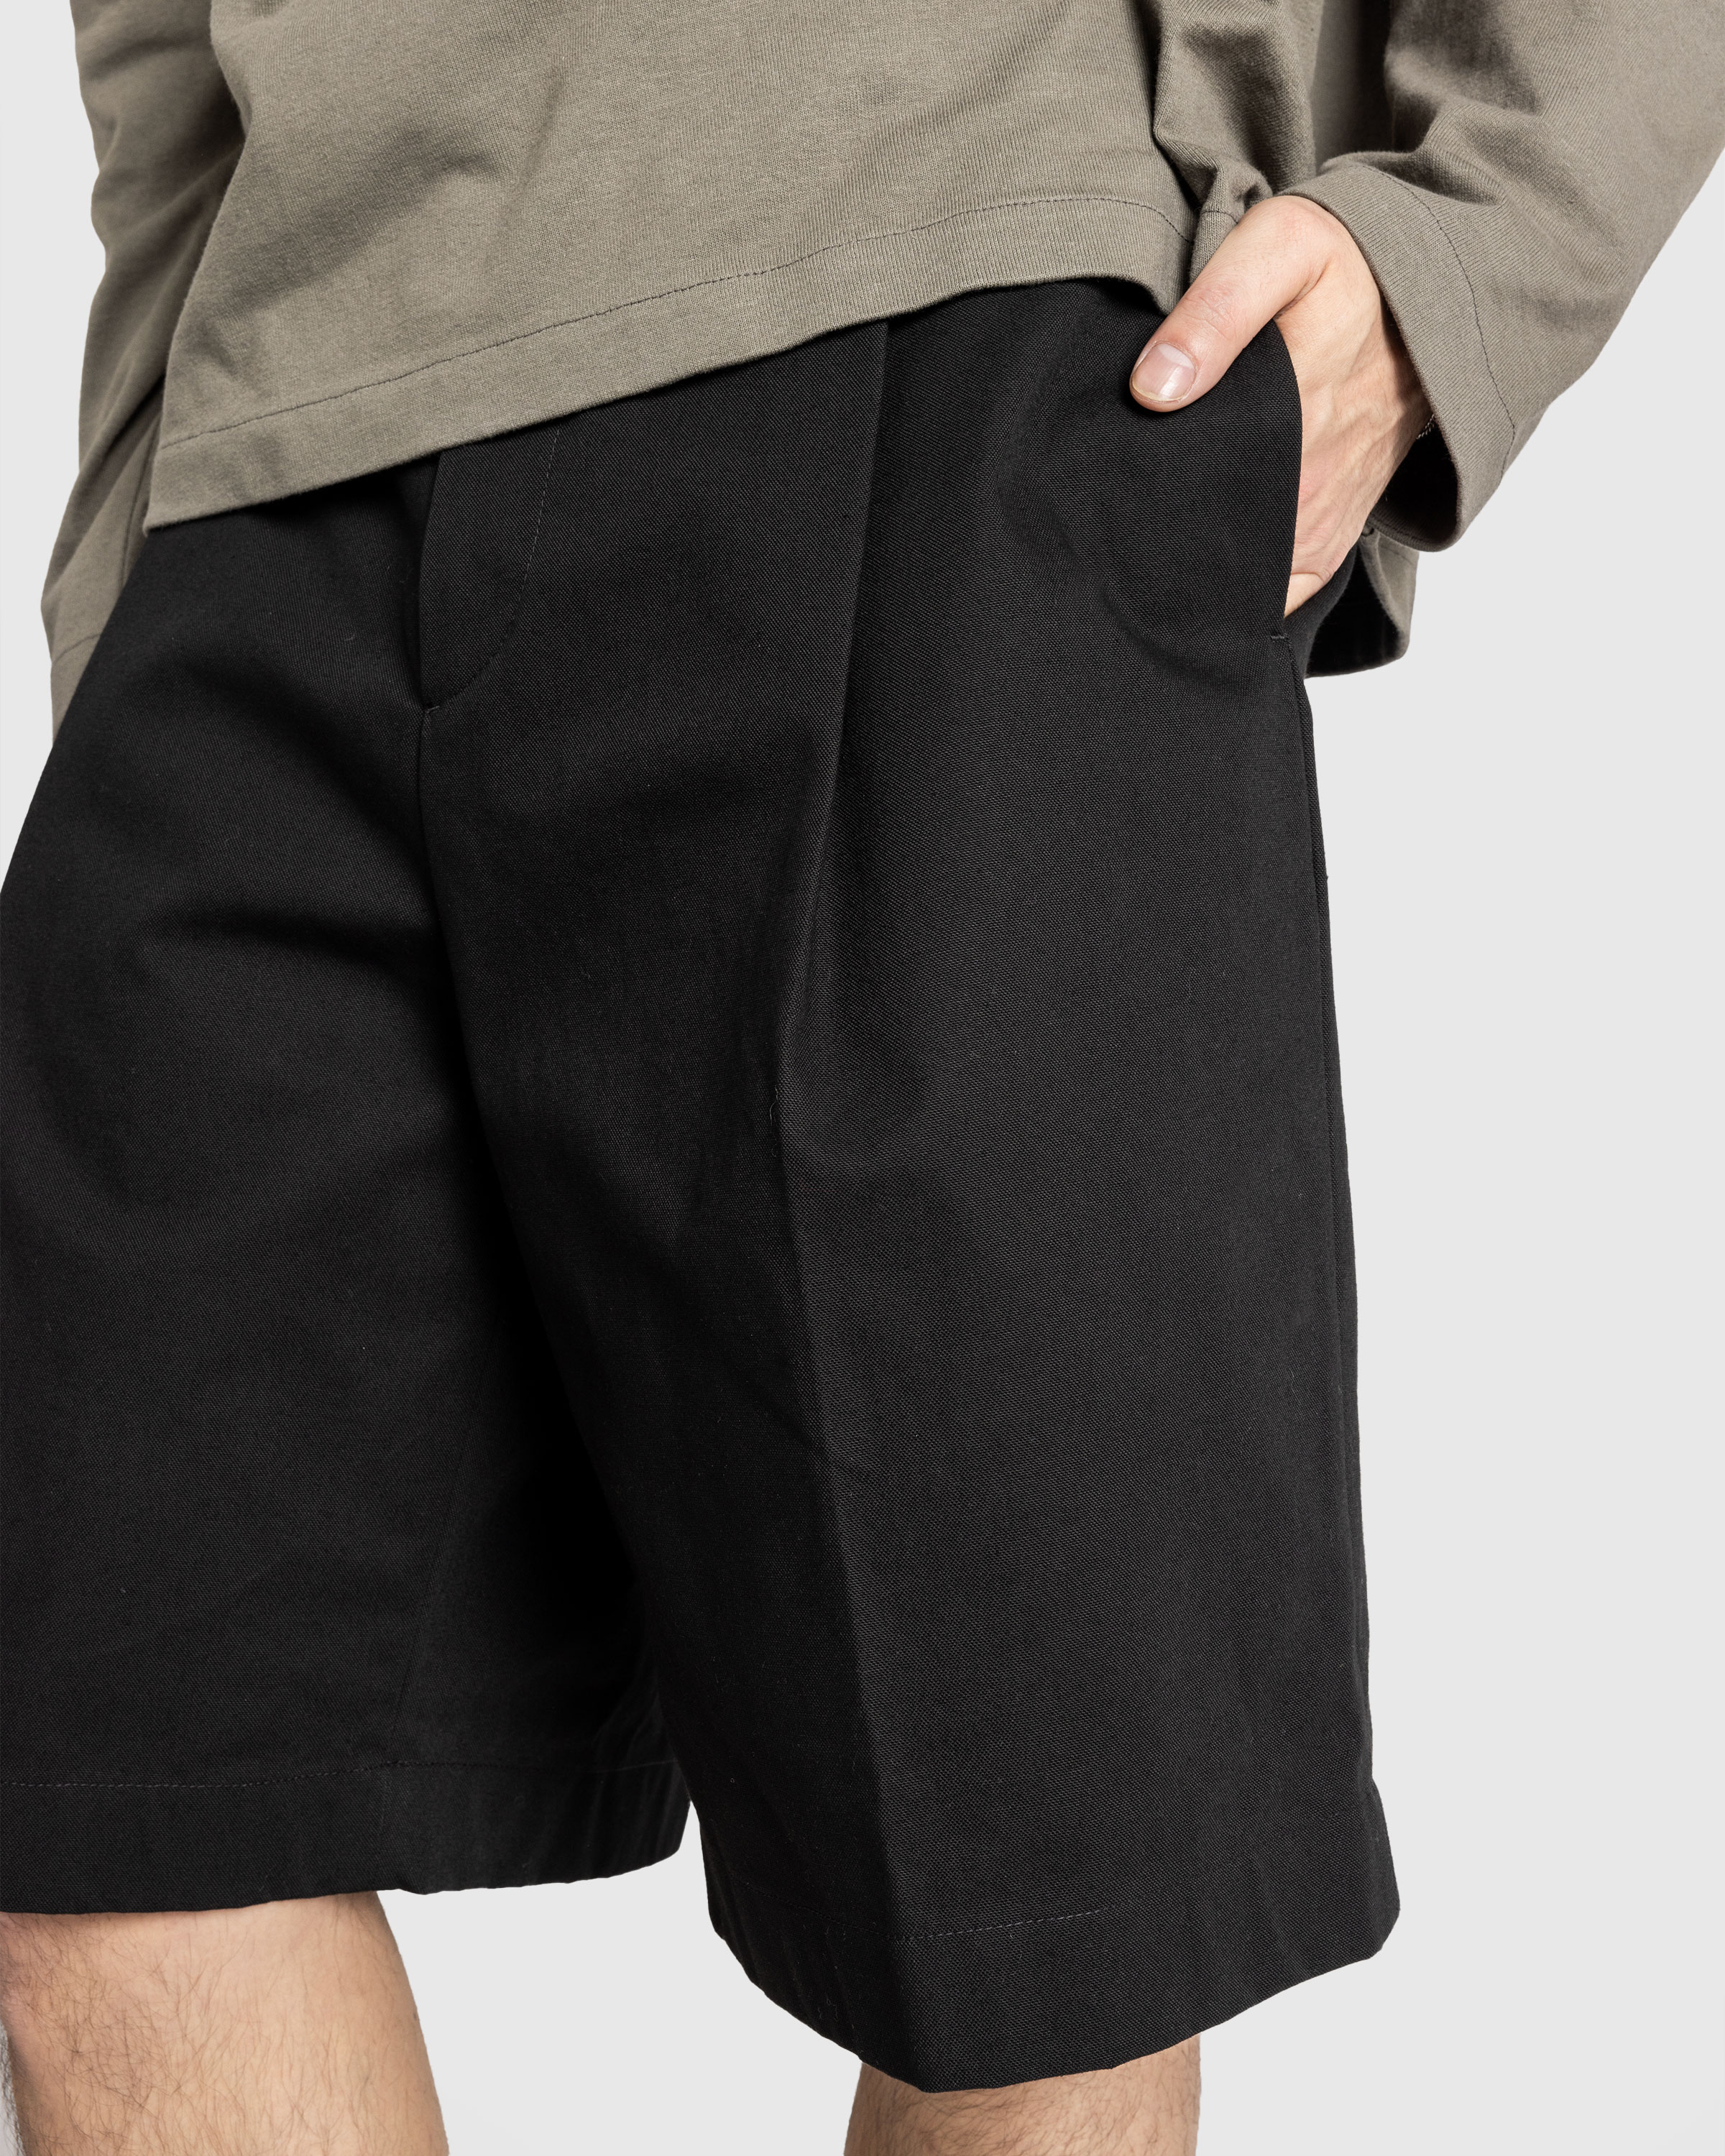 Jil Sander – Trouser 105 Shorts Black - Bermuda Cuts - Black - Image 6